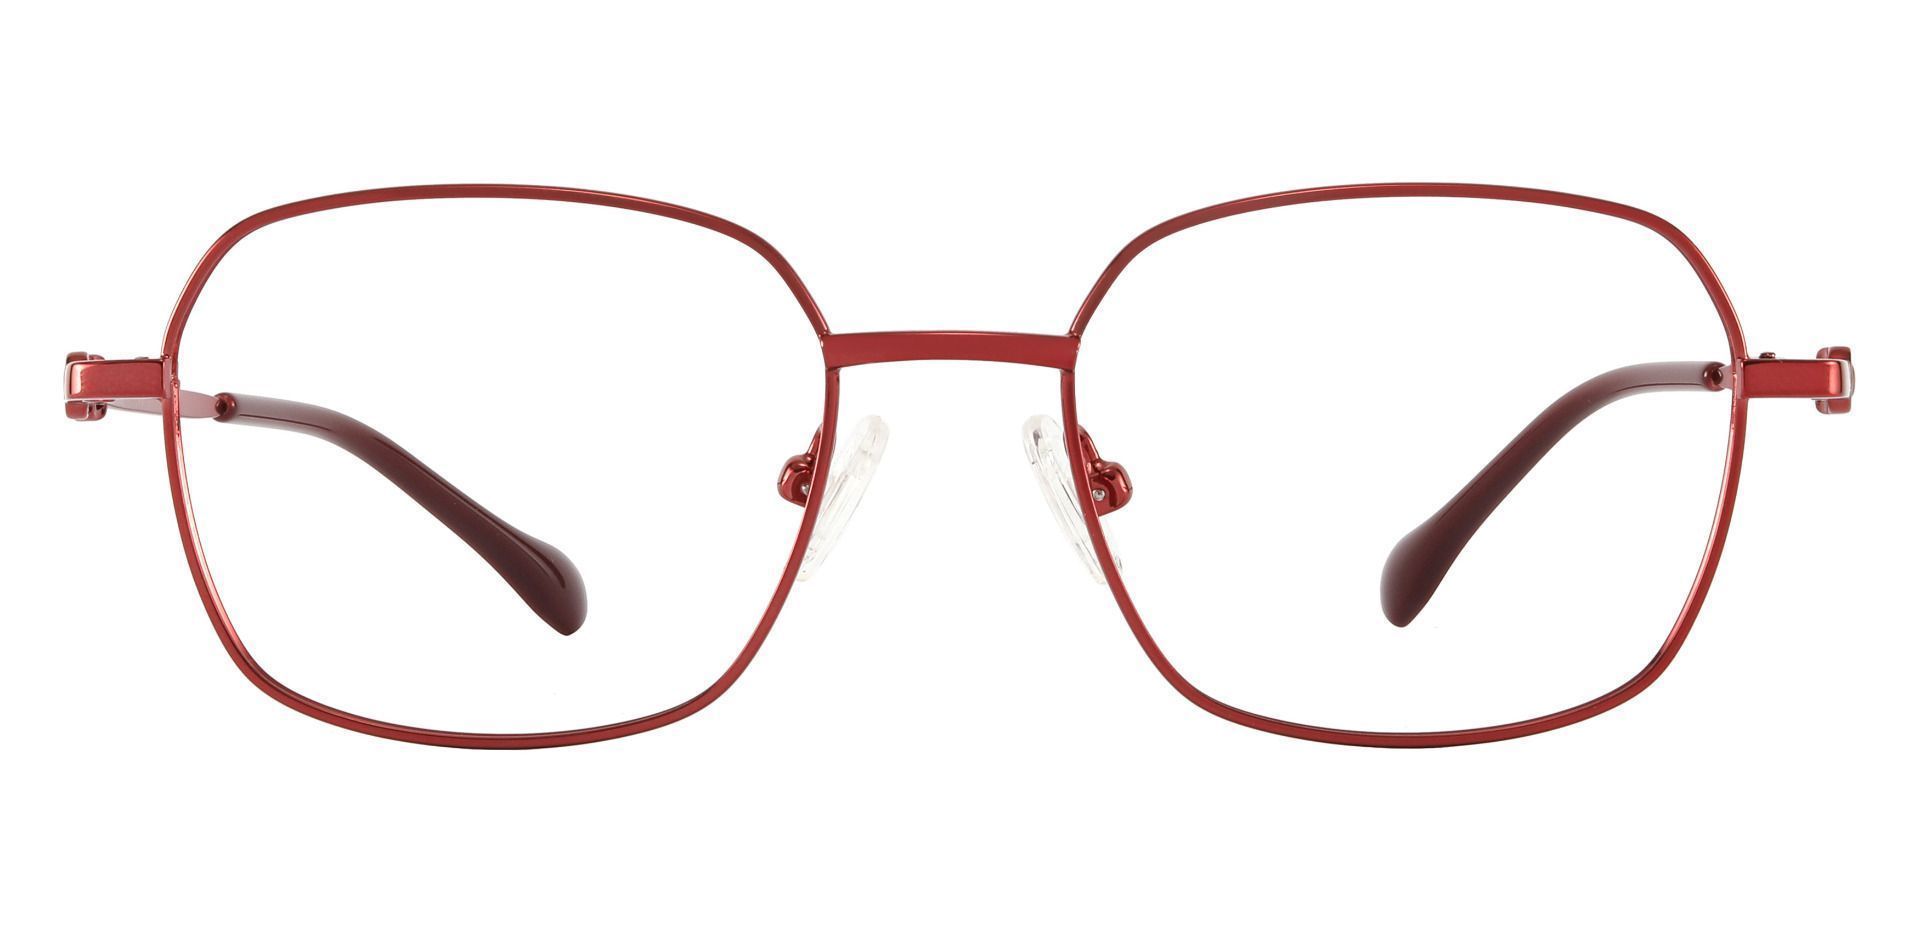 Averill Geometric Lined Bifocal Glasses - Red